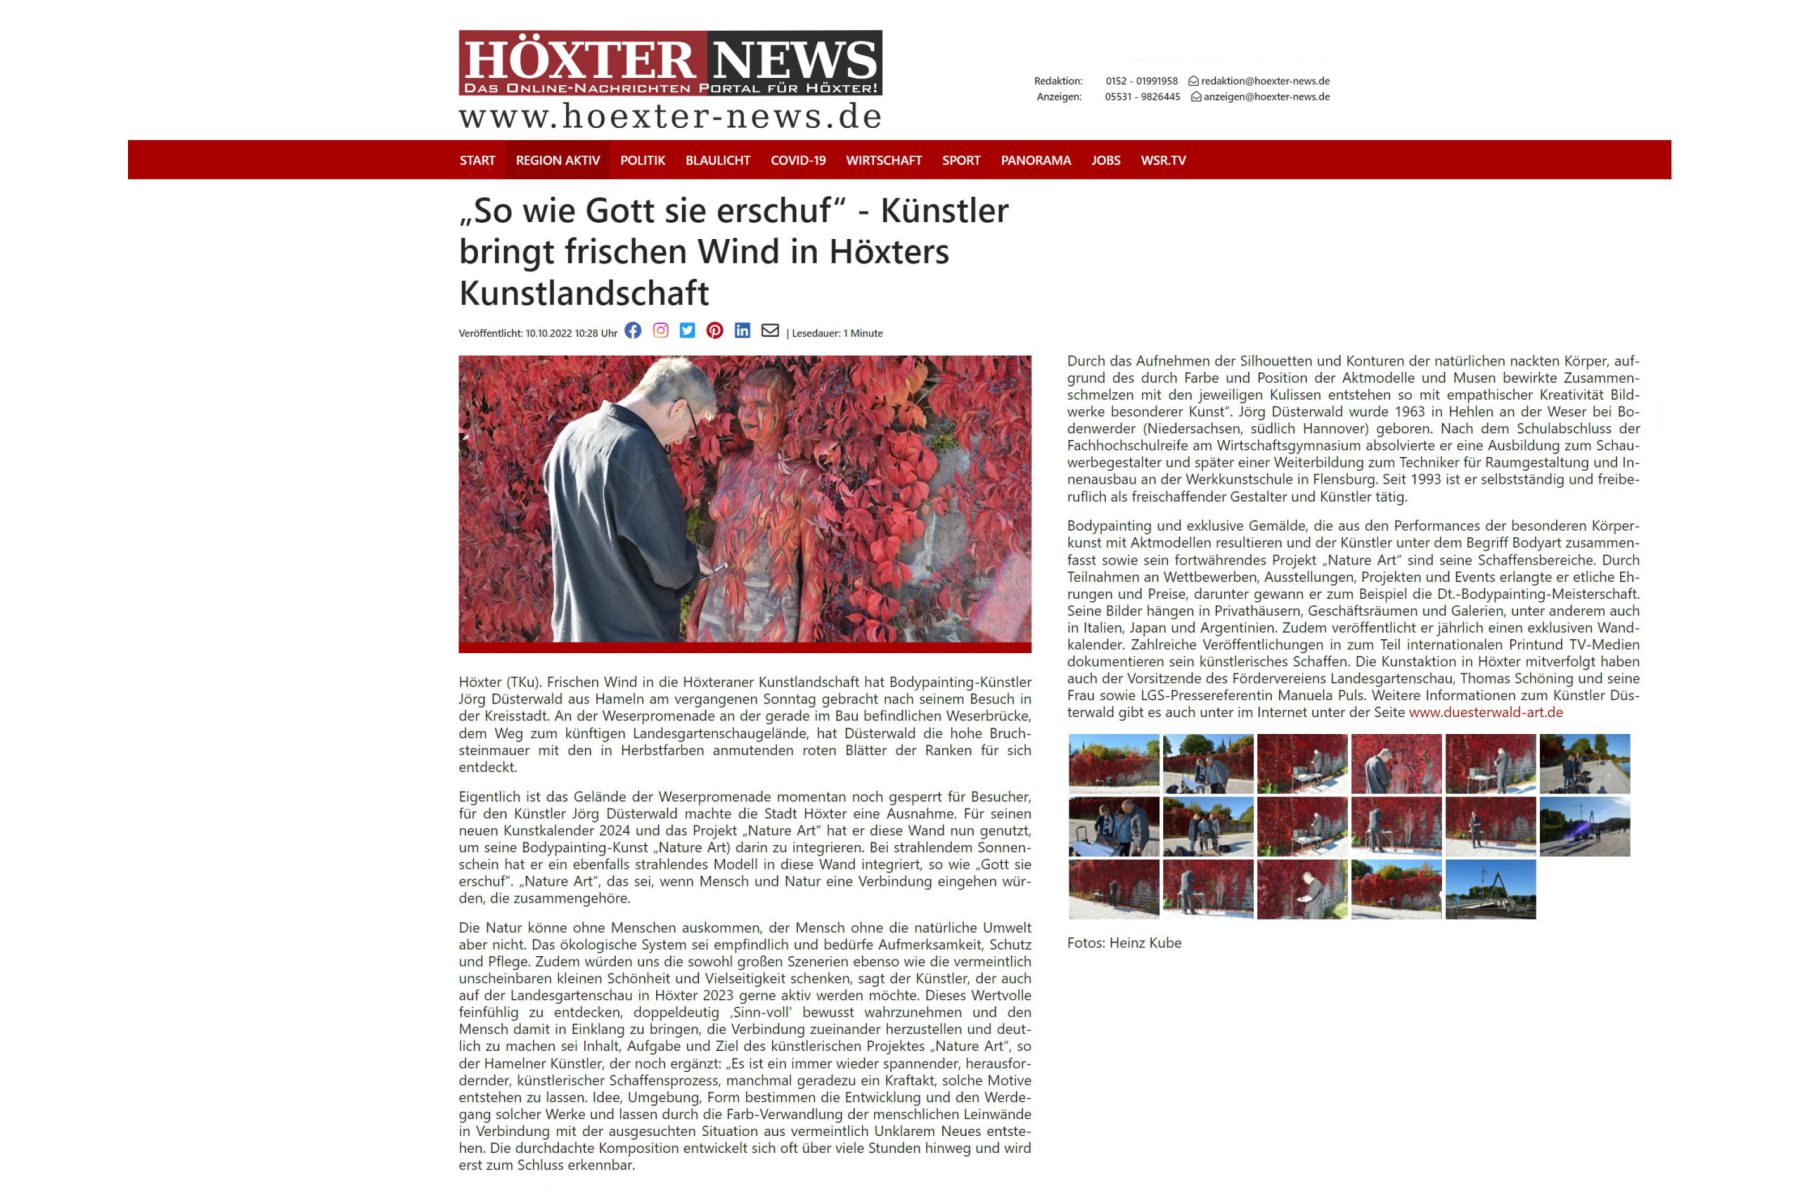 Medienbericht Bodypaintingprojekt NATUREART des Künstlers Jörg Düsterwald (Medium: Höxter-News)